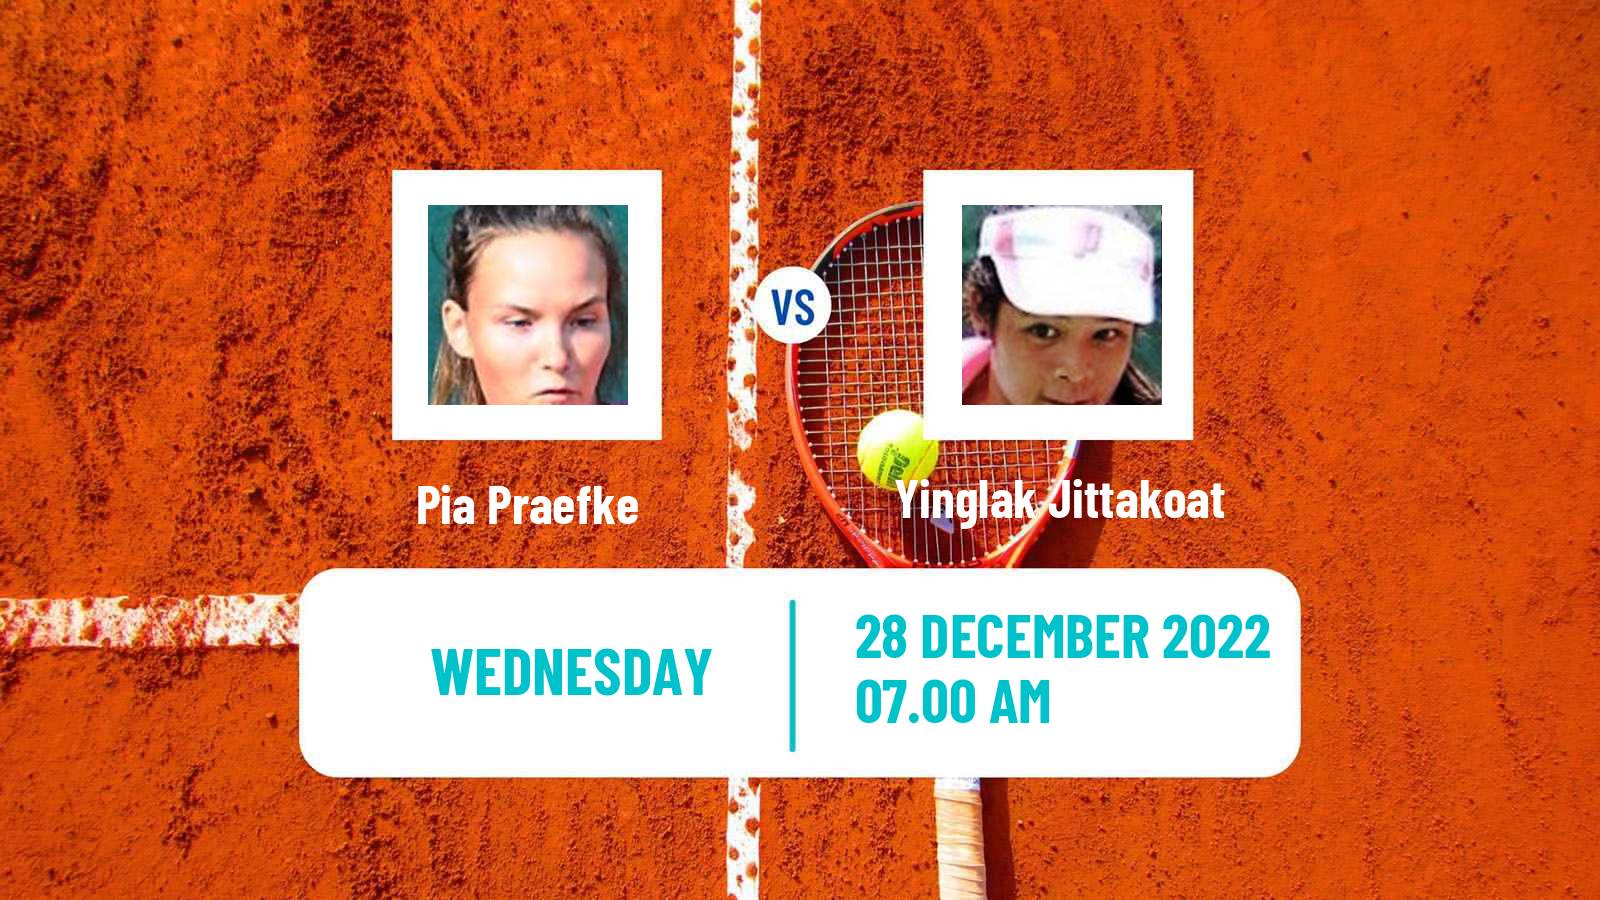 Tennis ITF Tournaments Pia Praefke - Yinglak Jittakoat